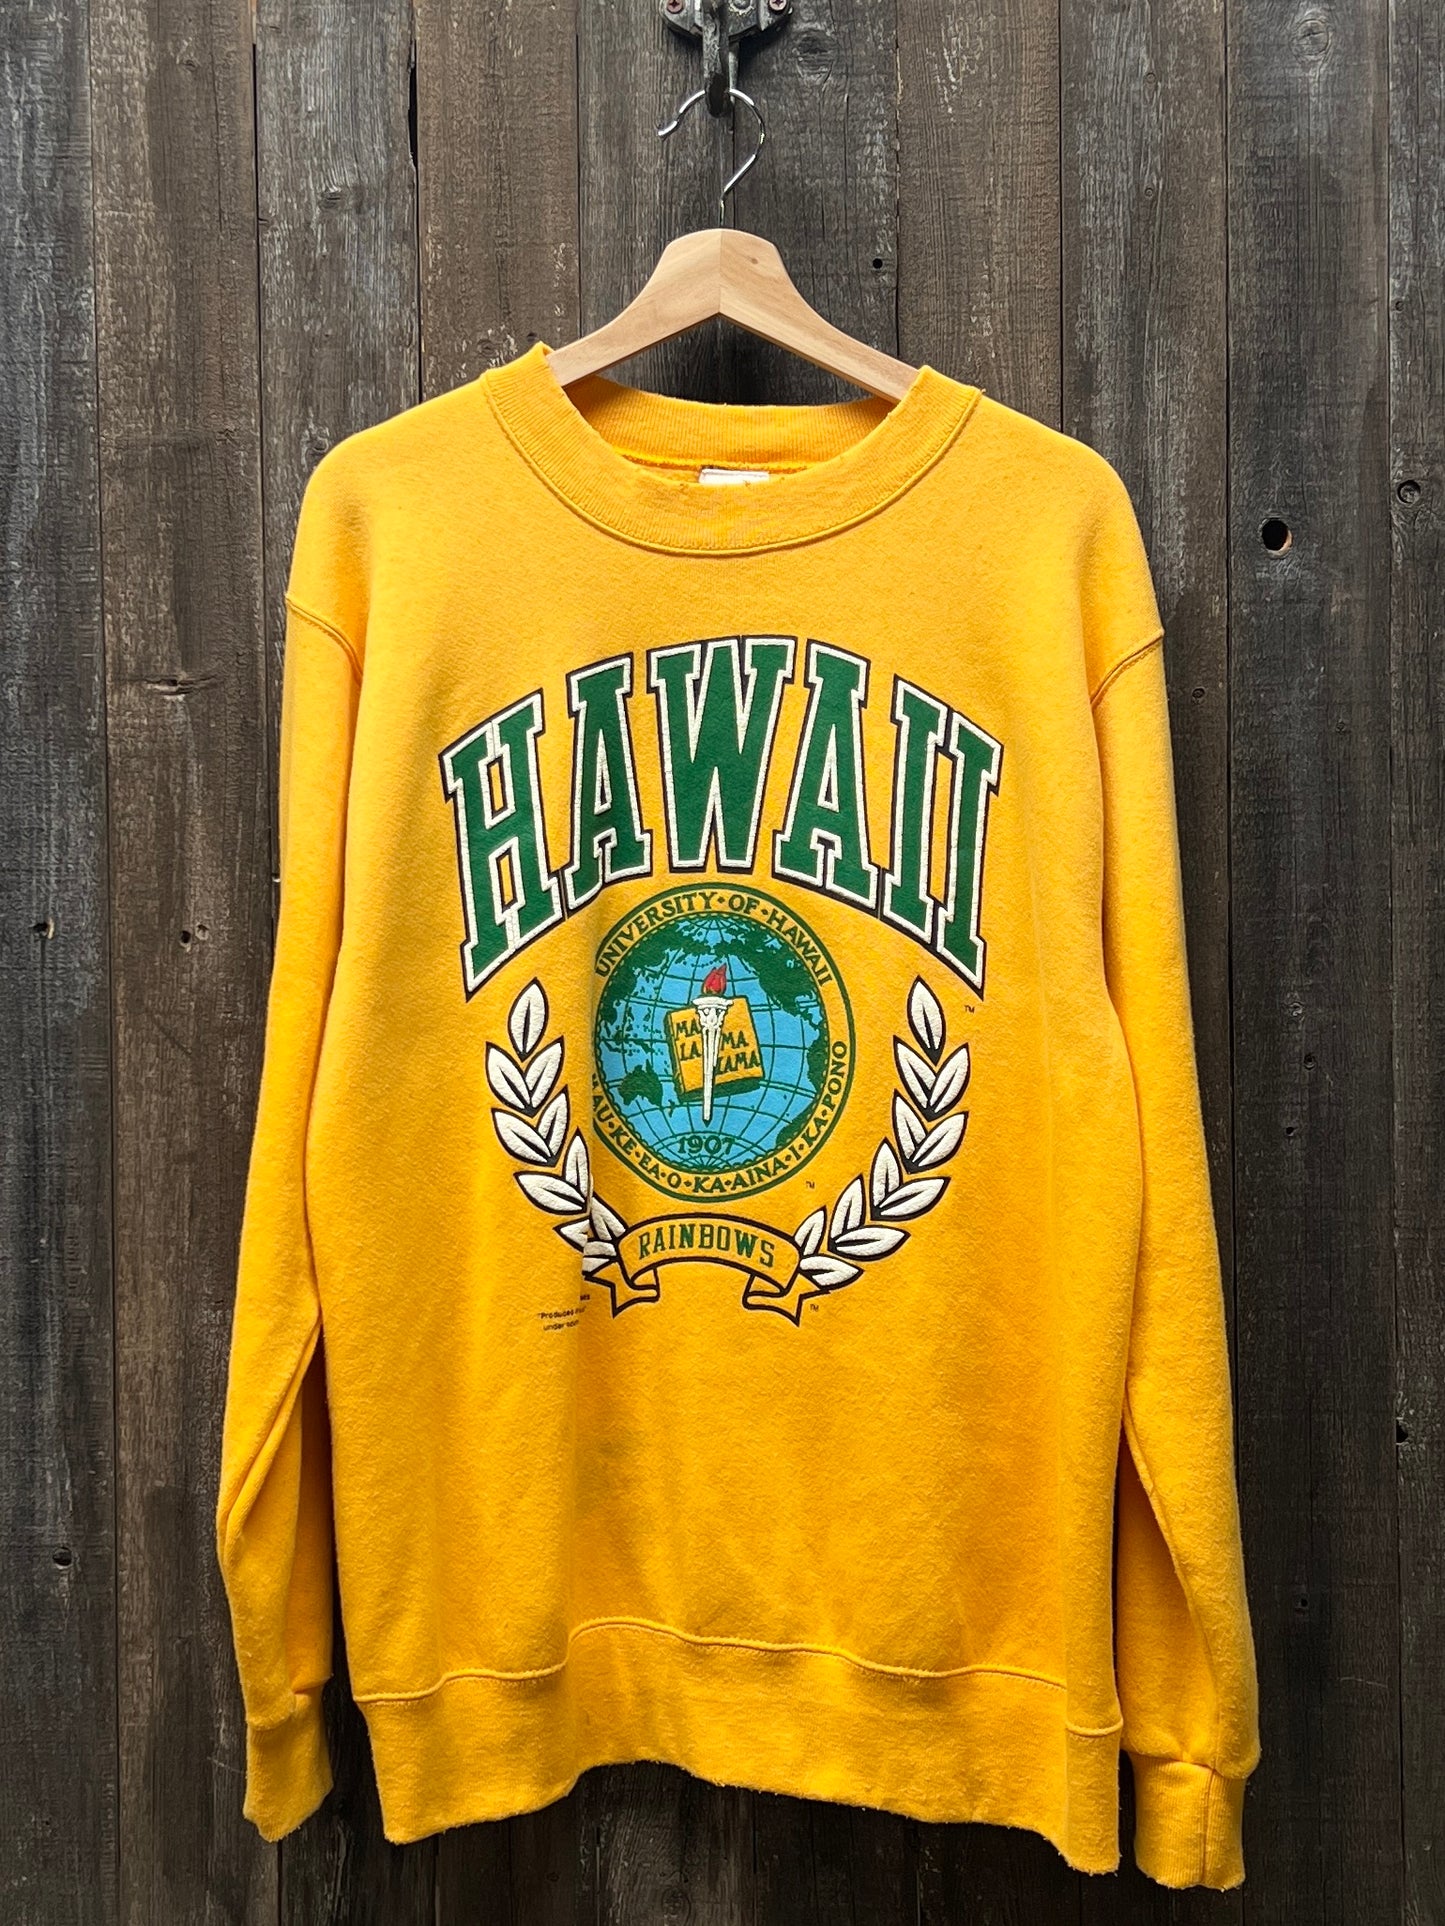 Hawaii Sweatshirt -M/L-Customize Your Embroidery Wording